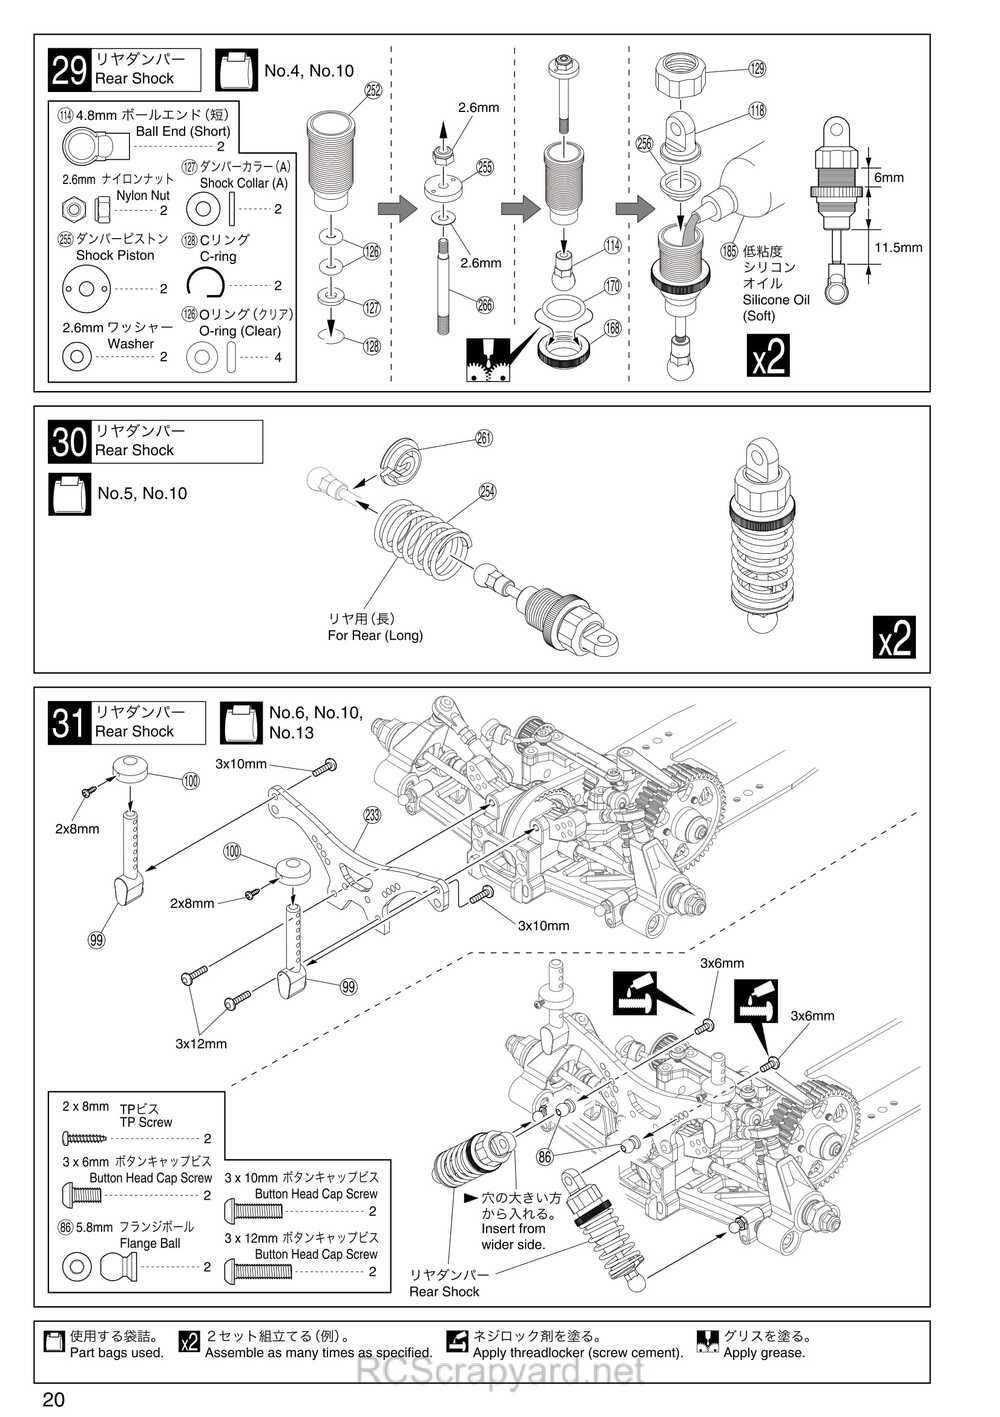 Kyosho - 31263 - V-One RRR Evo2 WC - Manual - Page 20